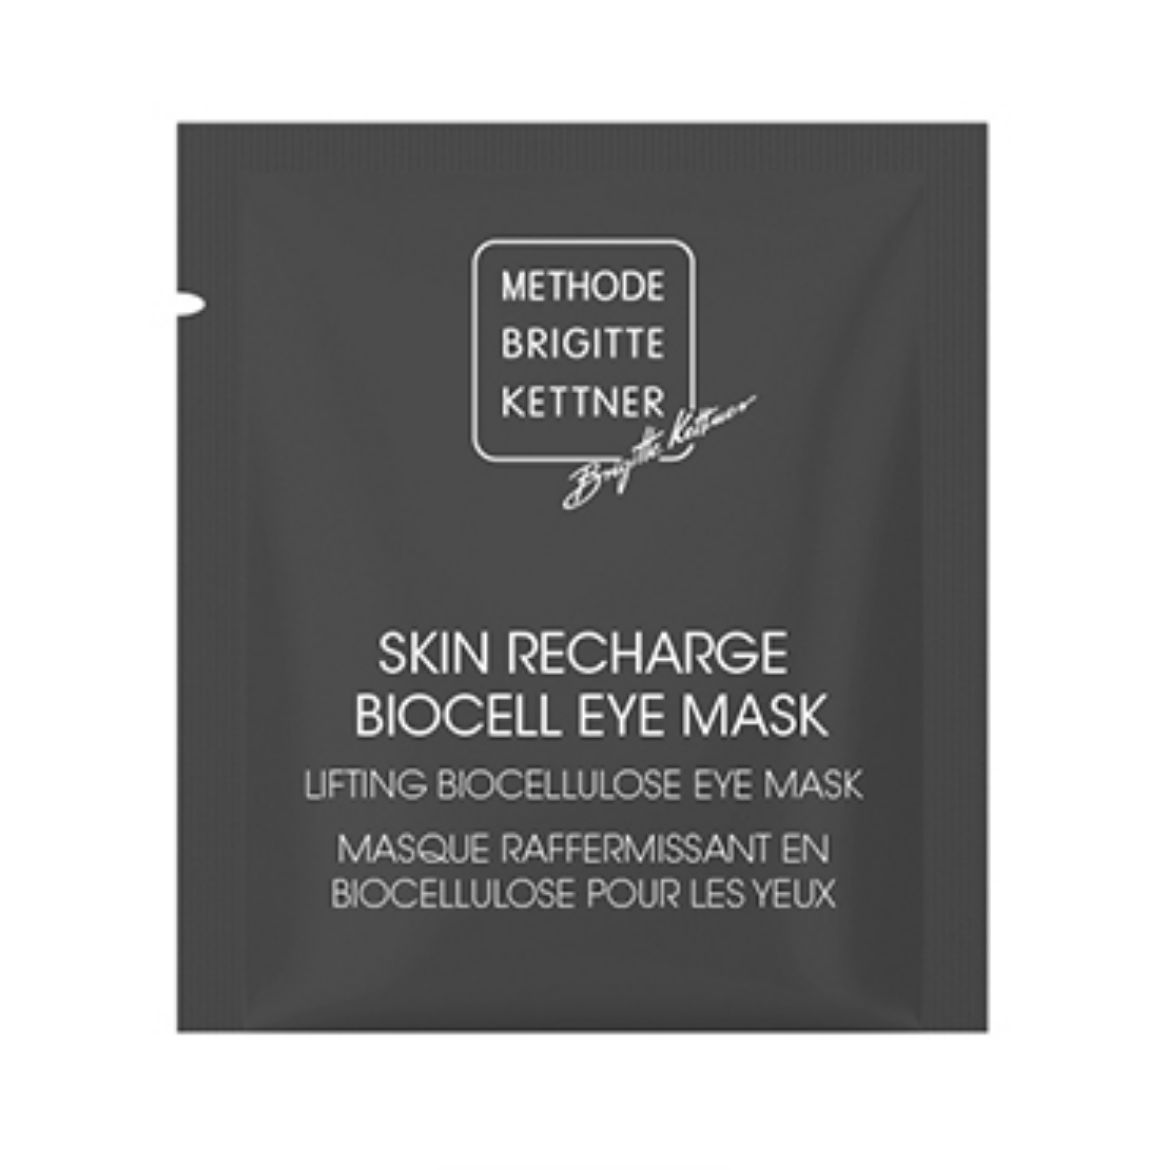 Immagine di Methode Brigitte Kettner Skin Recharge Biocell Eye Mask (5 Stk.)